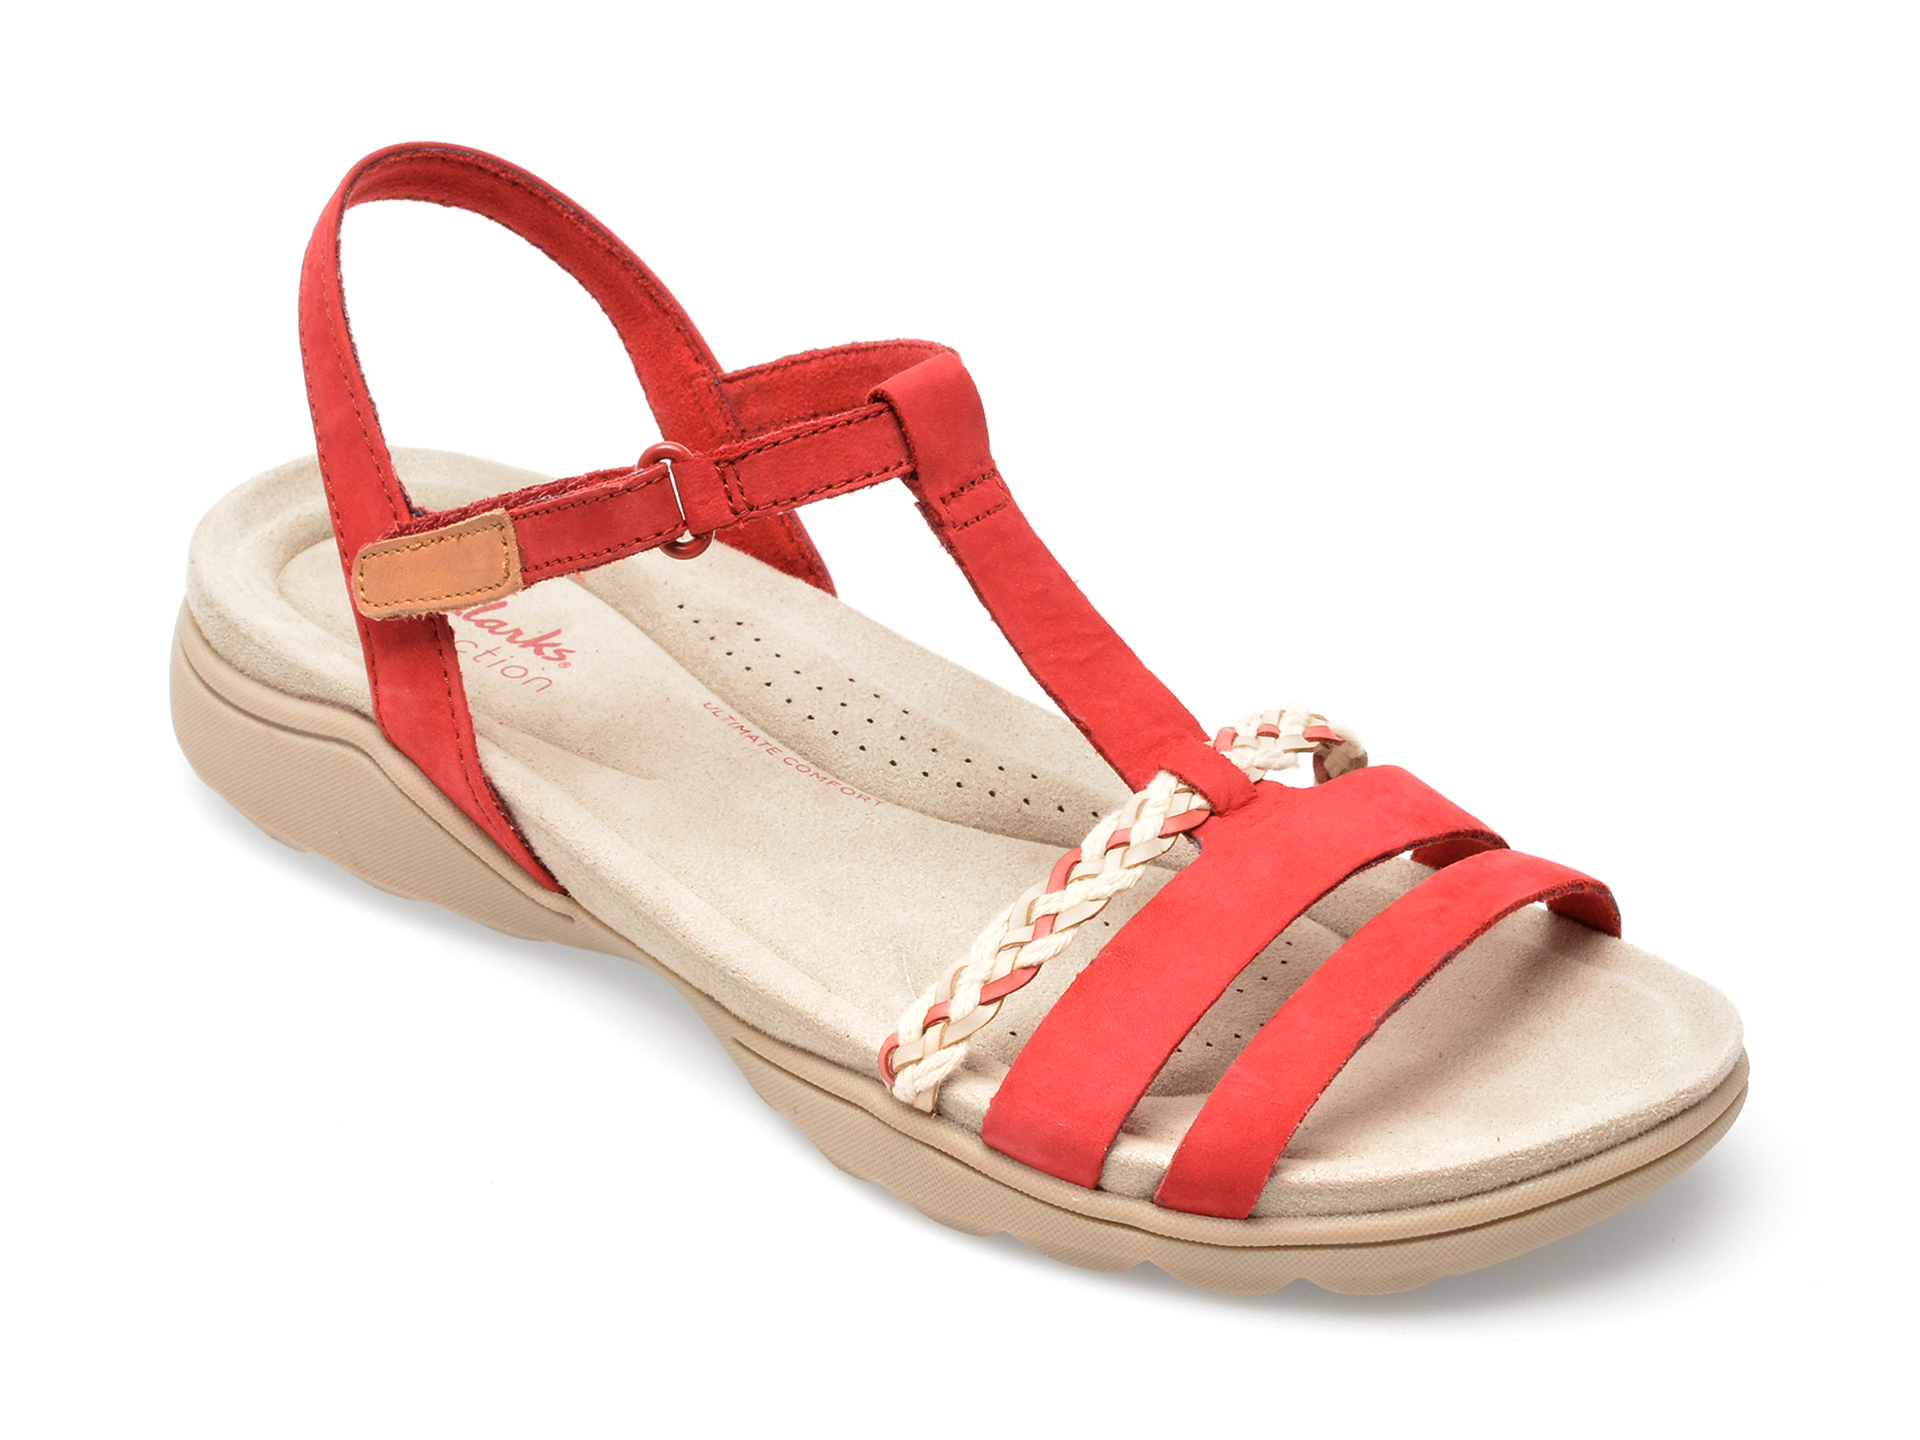 Sandale CLARKS rosii, AMANDA TEALITE 0912, din nabuc Answear 2023-09-28